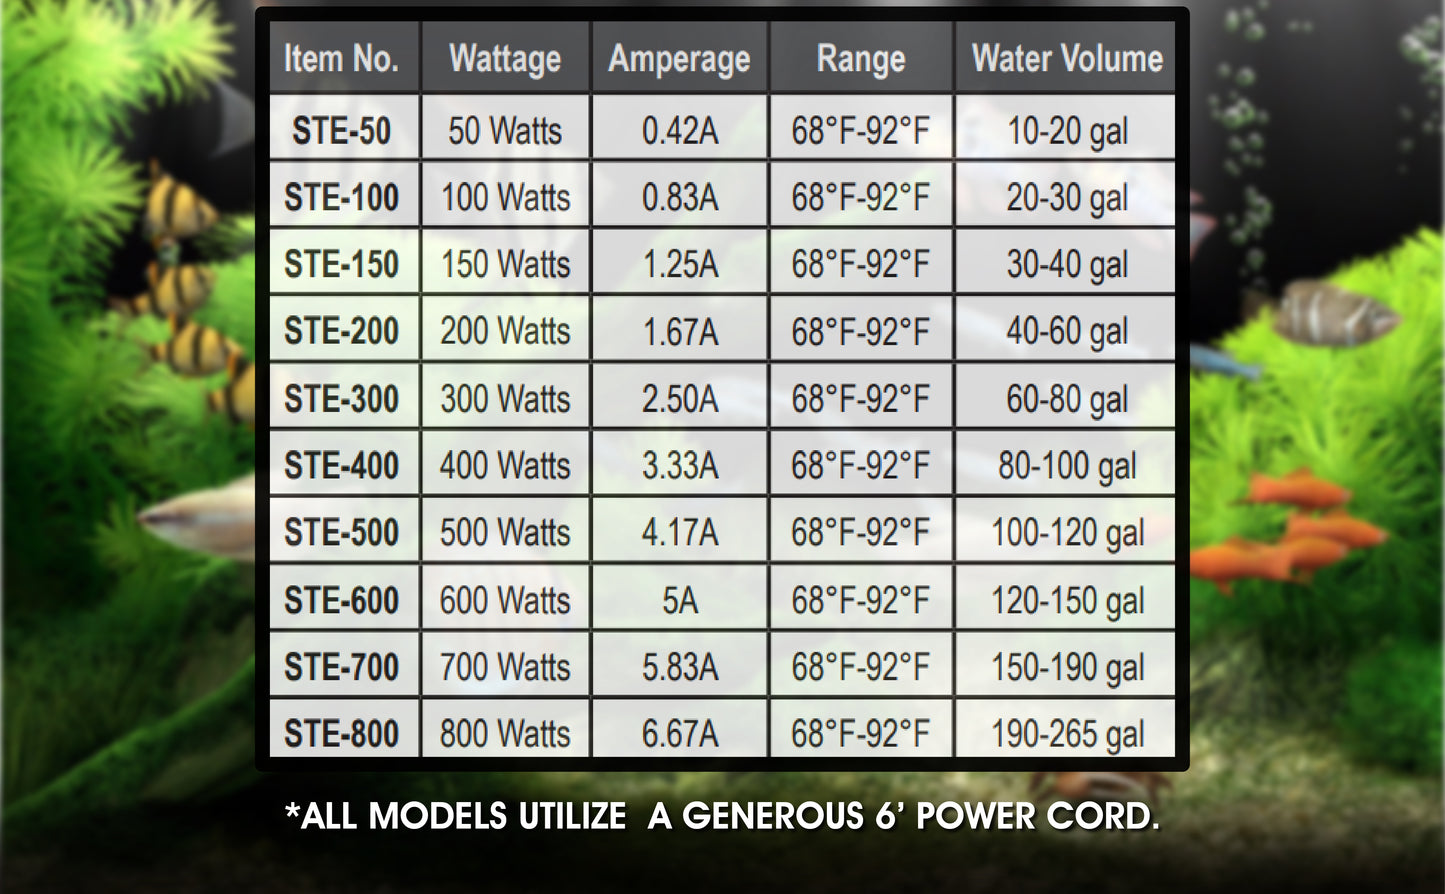 Finnex Titanium Aquarium Heater Digital ETL Listed STE Series: 200, 400, 600, 800 watts